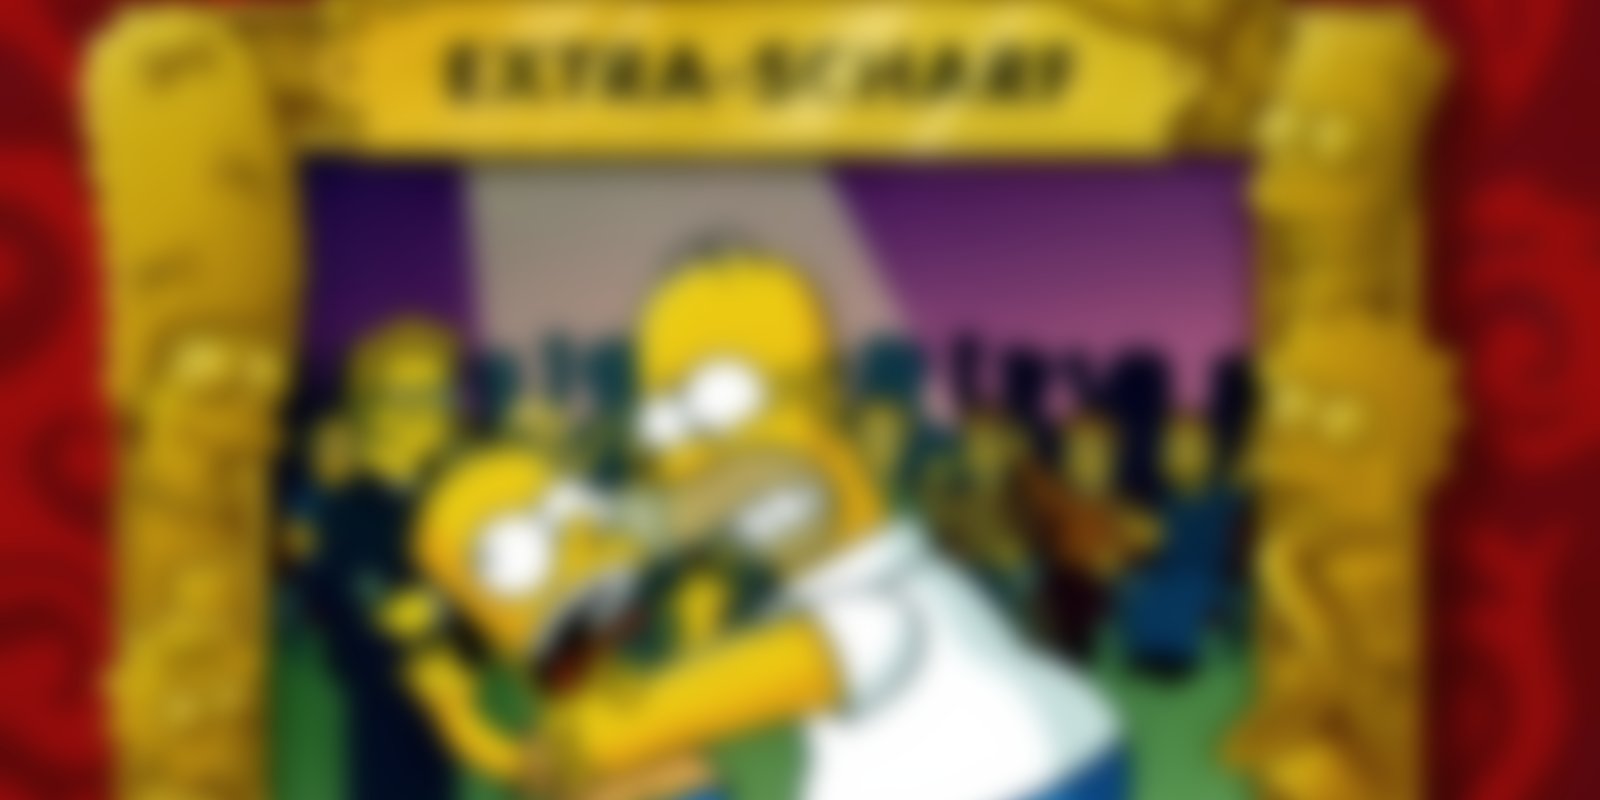 Die Simpsons - Extra scharf!